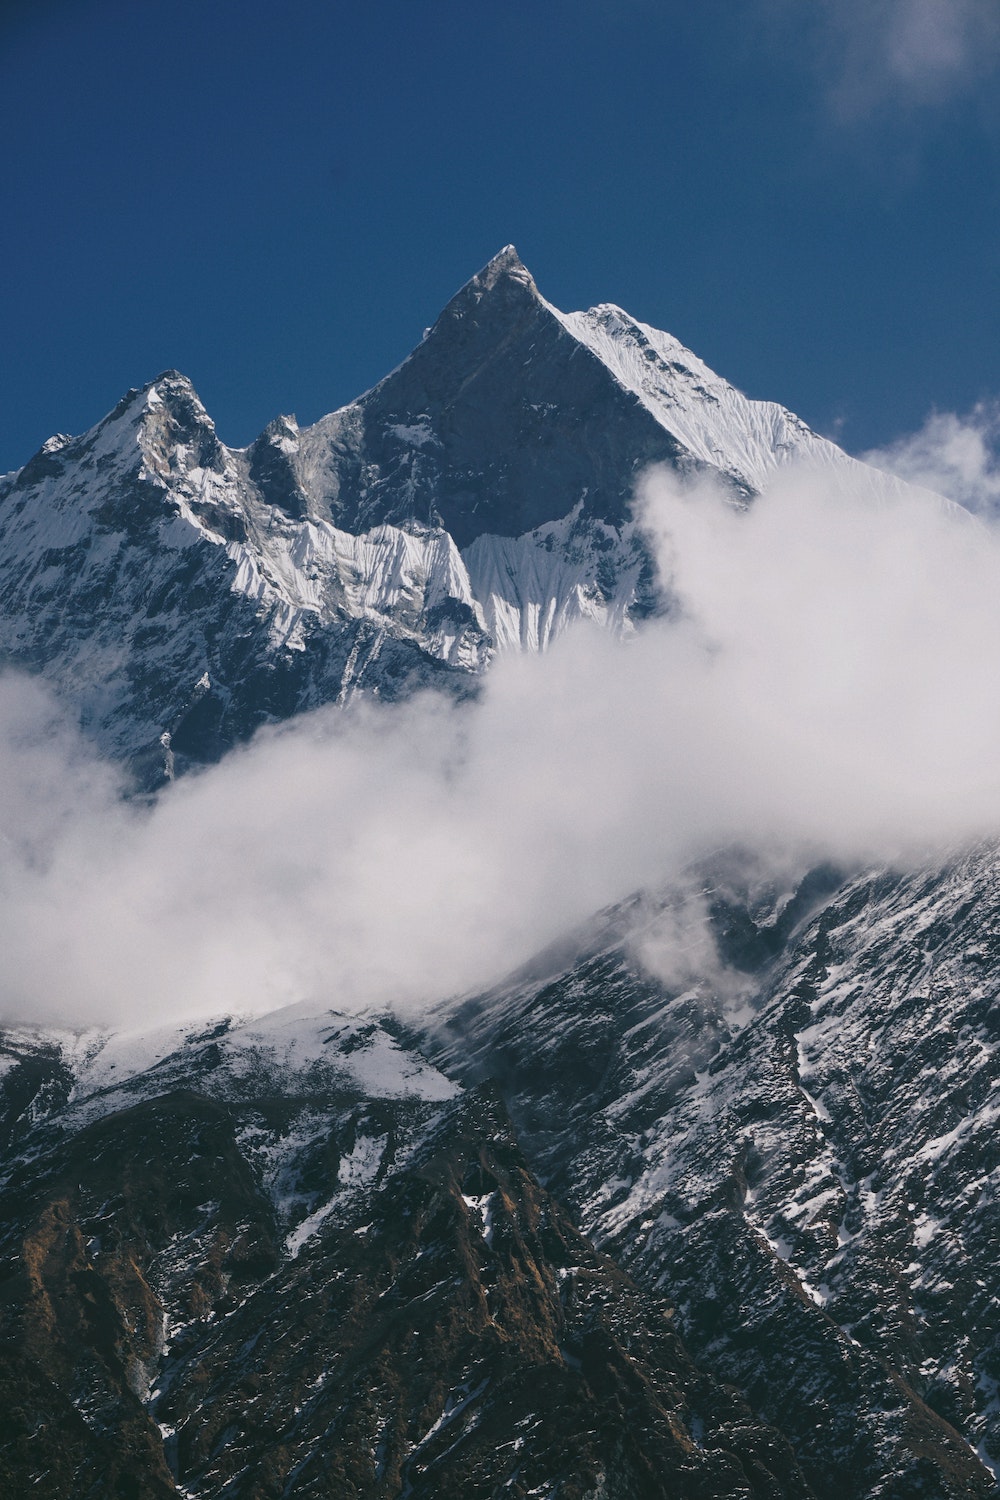 Photo credit (Himalayas): Azmi/Unsplash